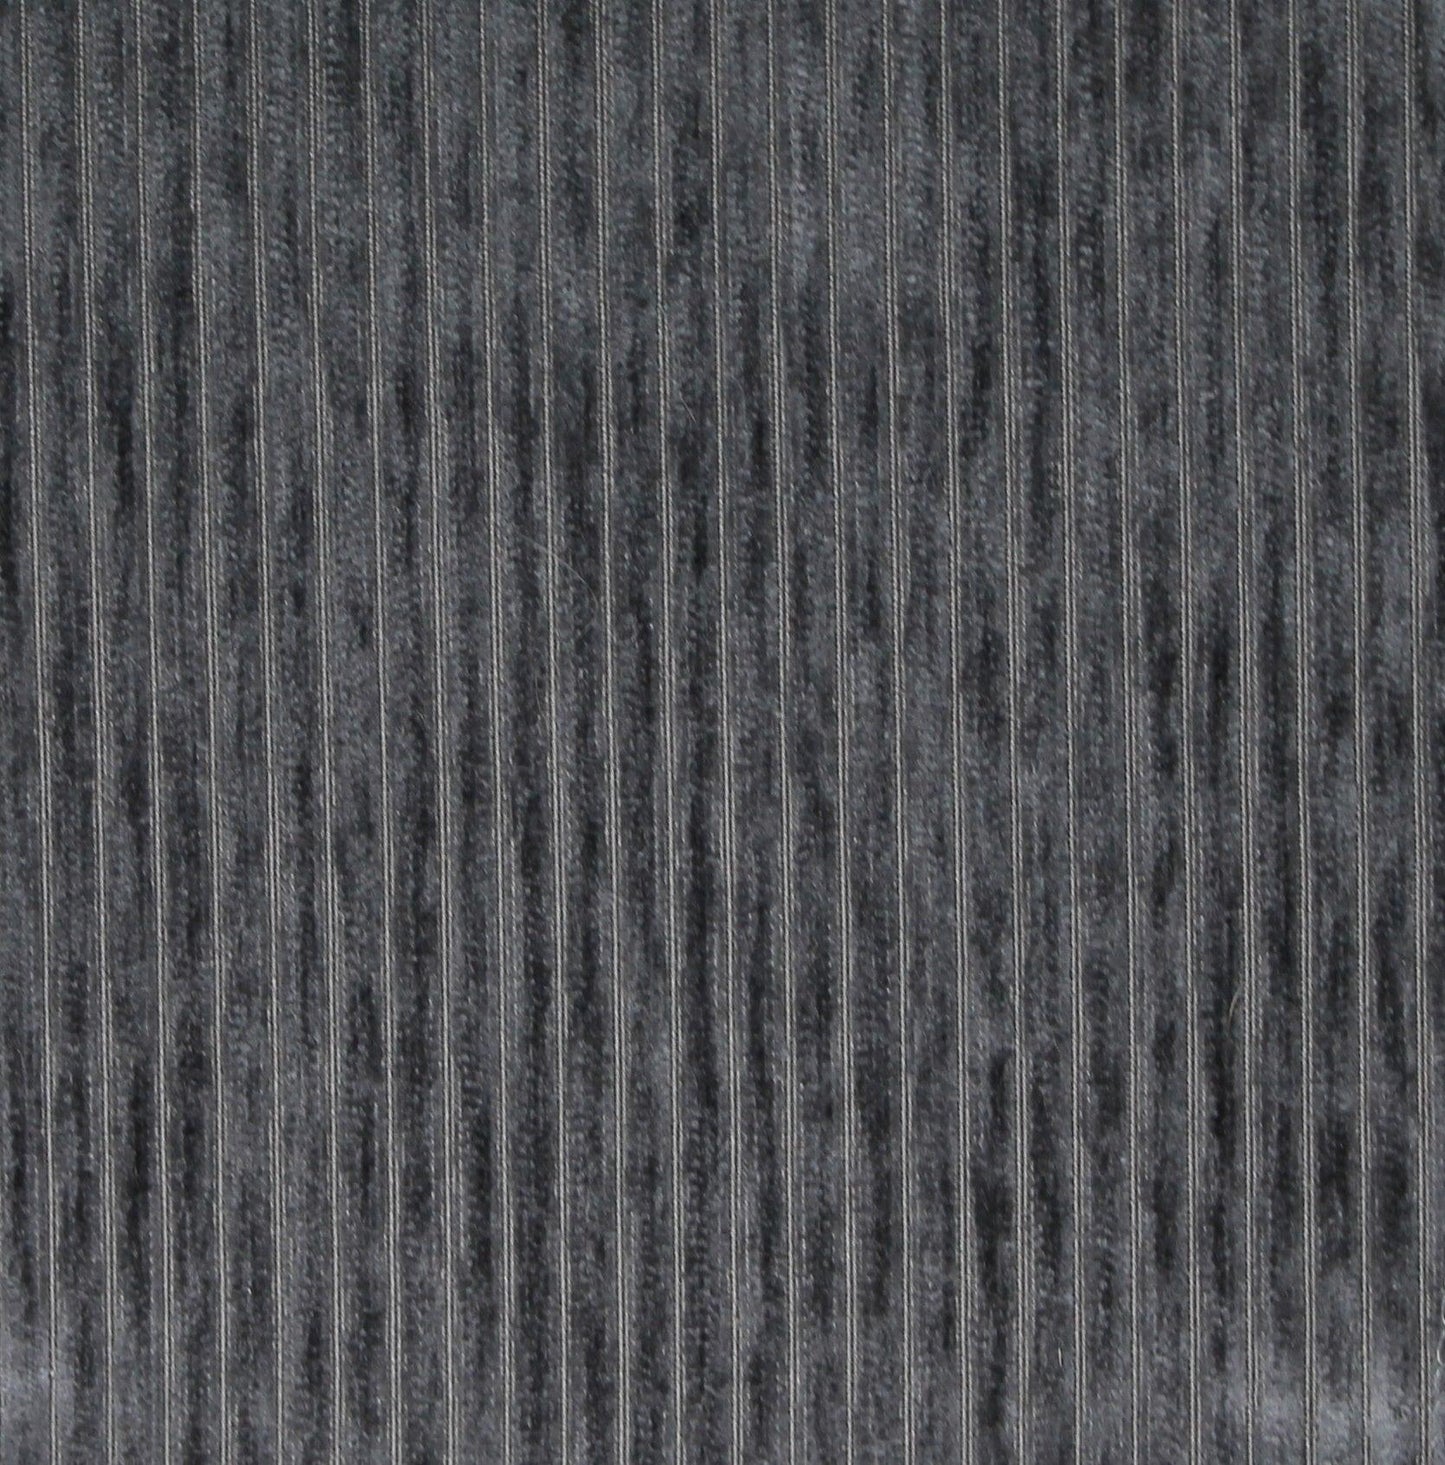 Corduroy upholstery in dark grey